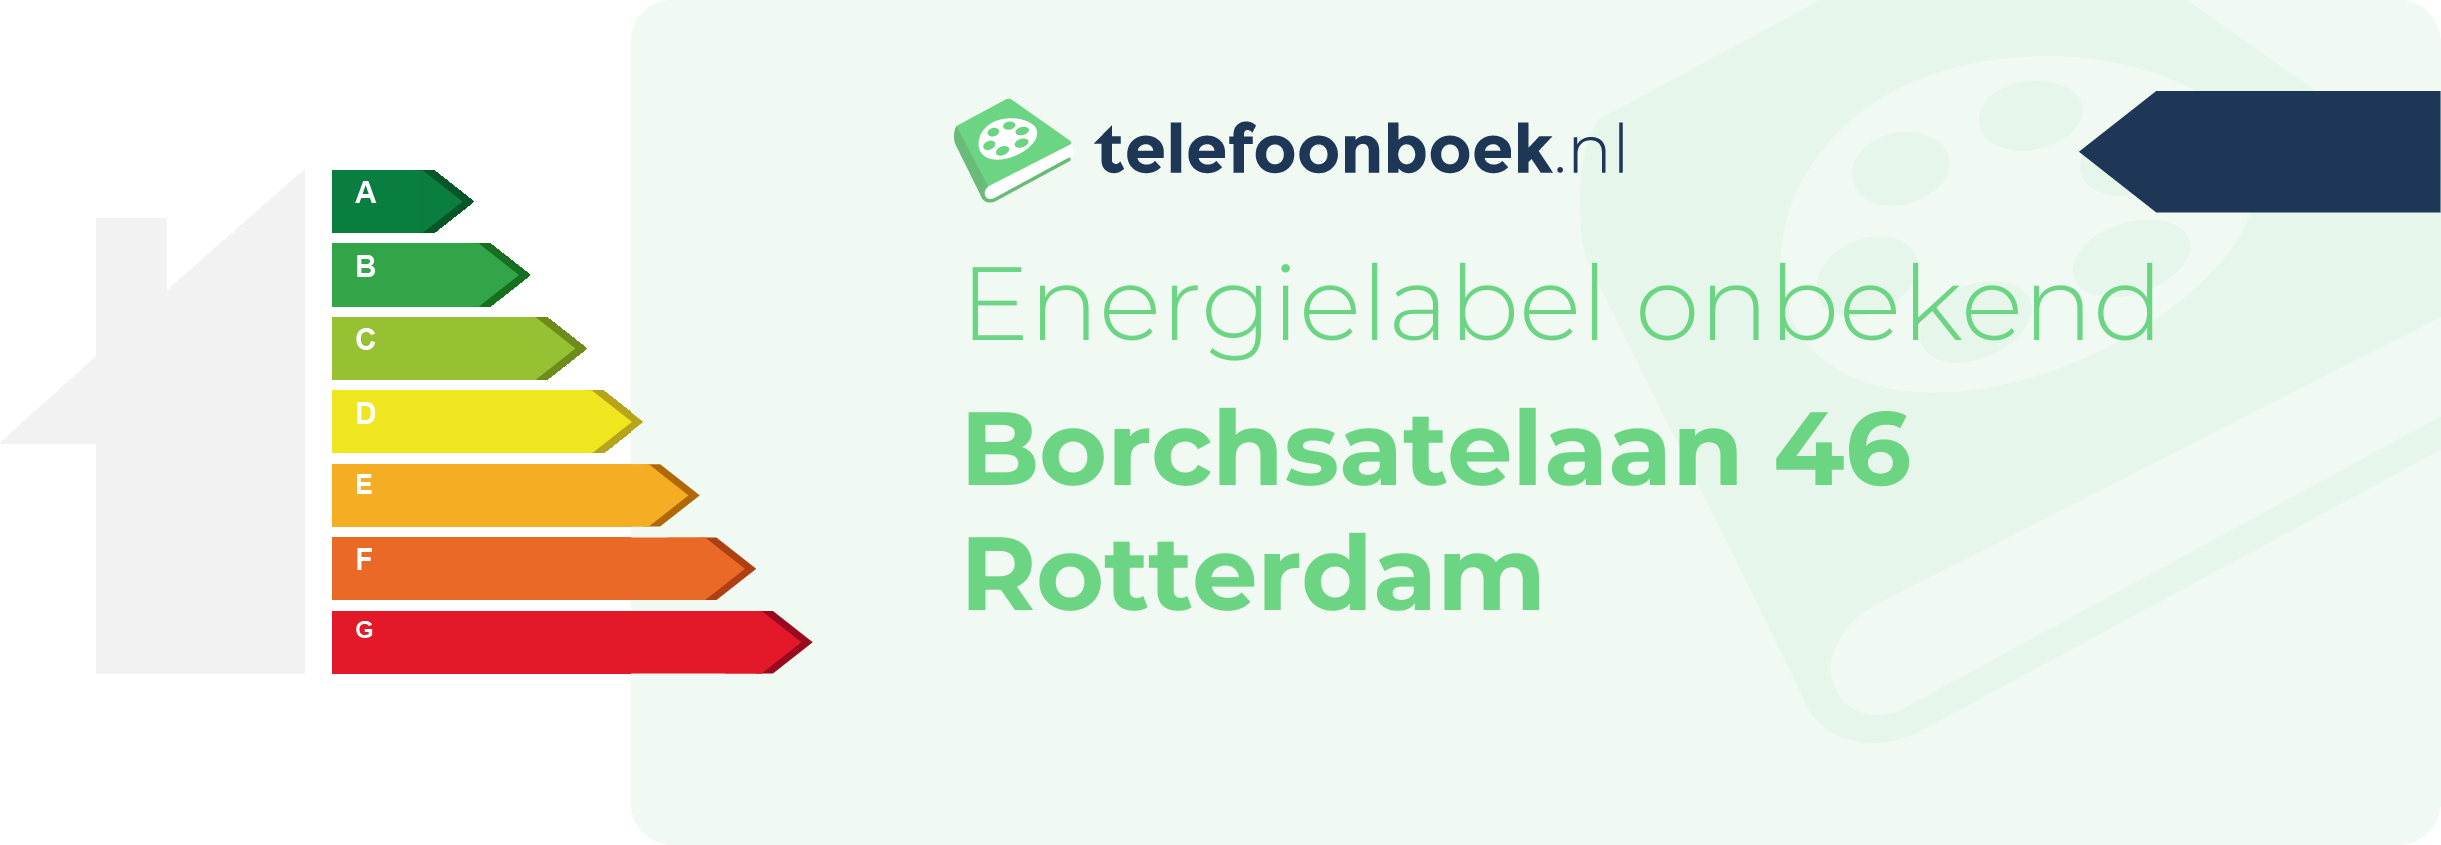 Energielabel Borchsatelaan 46 Rotterdam